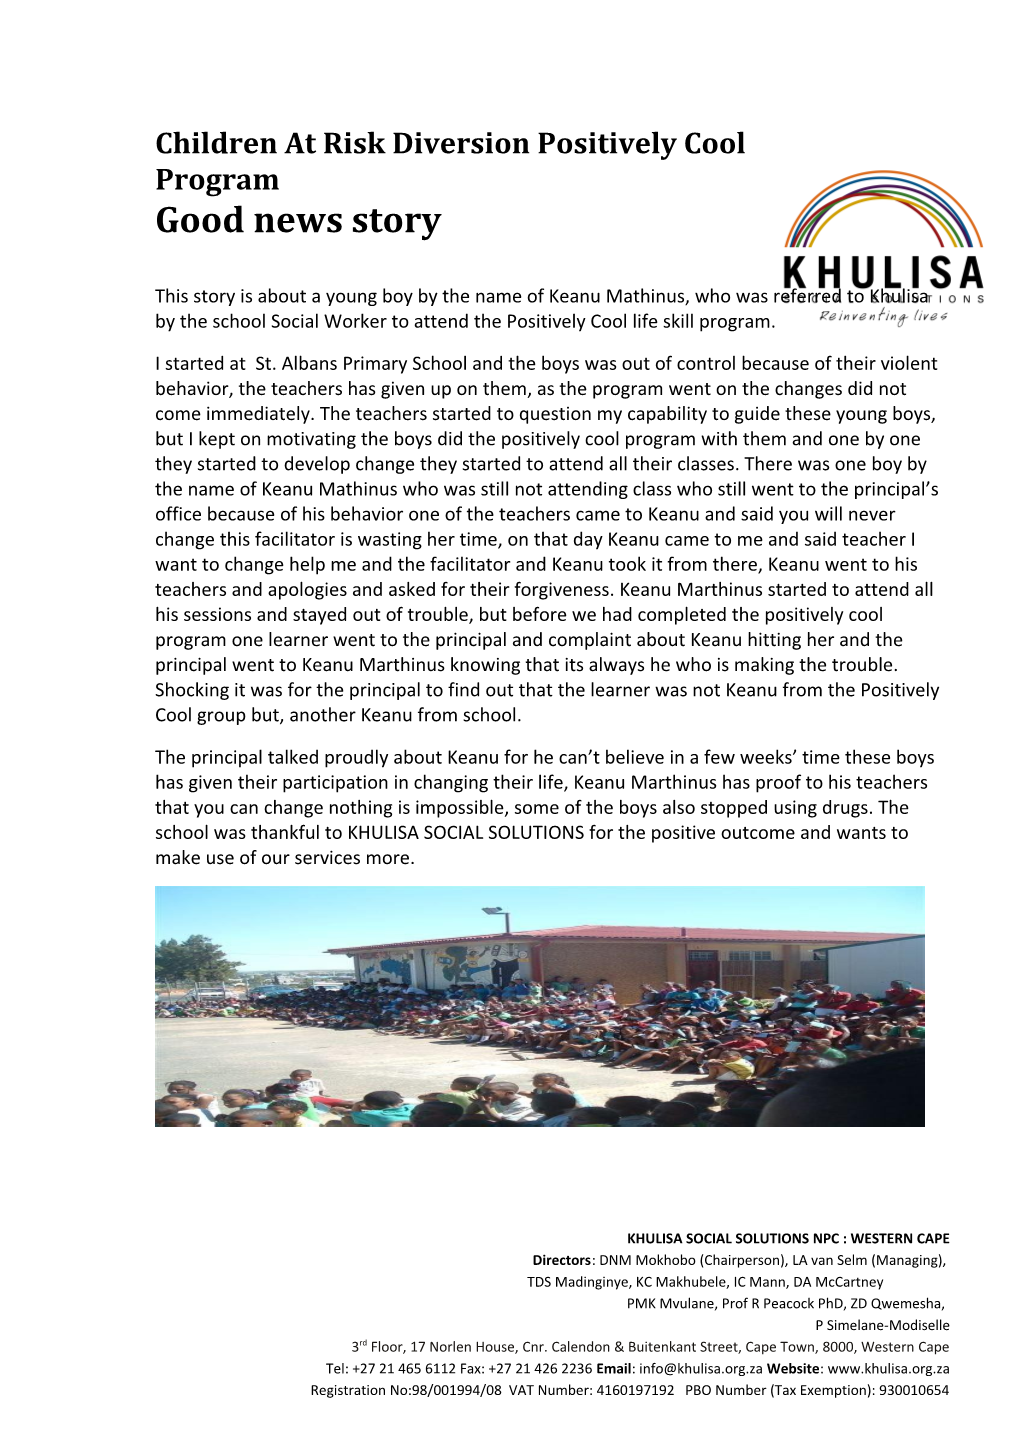 Khulisa Social Solutions Npc : Western Cape